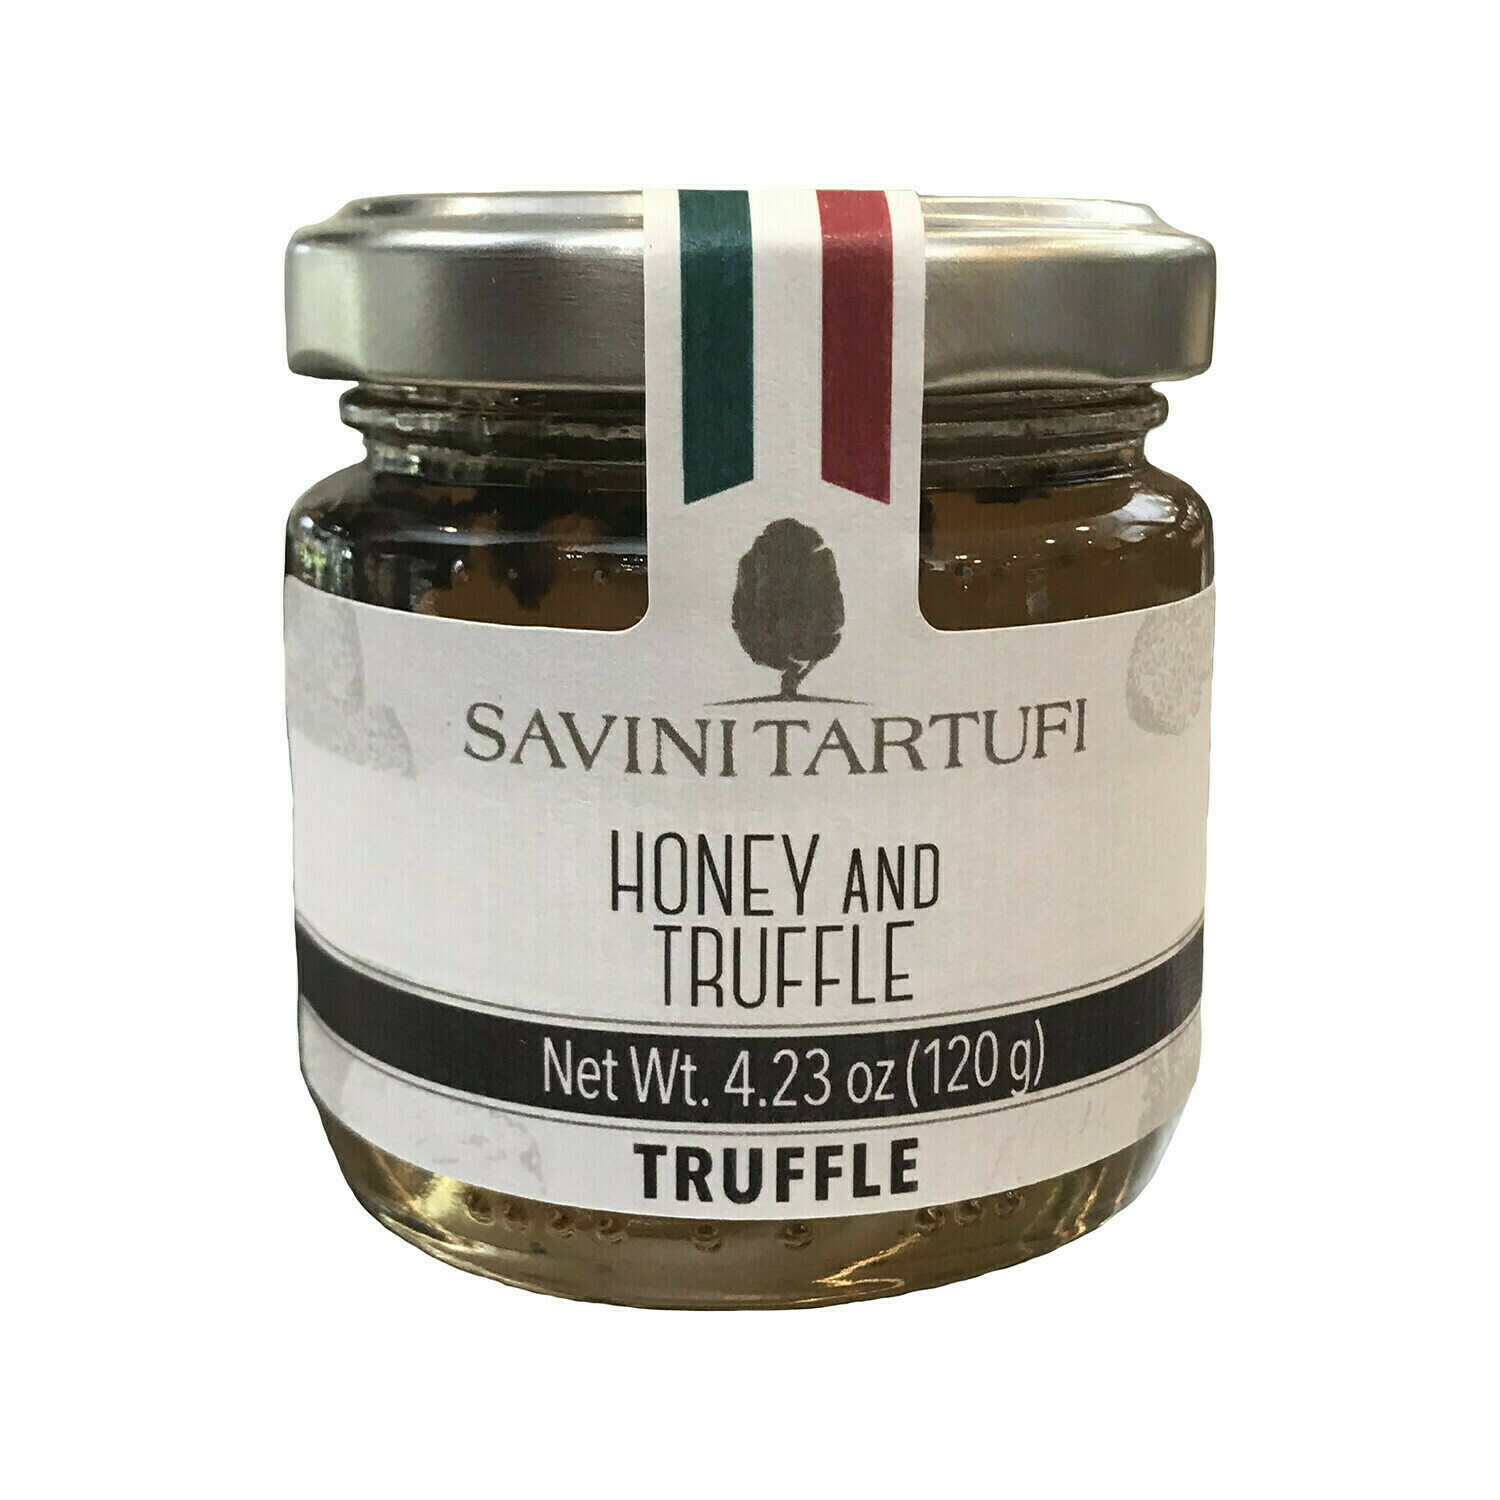 Savini Tartufi White Truffle Honey Italy 4.2 oz